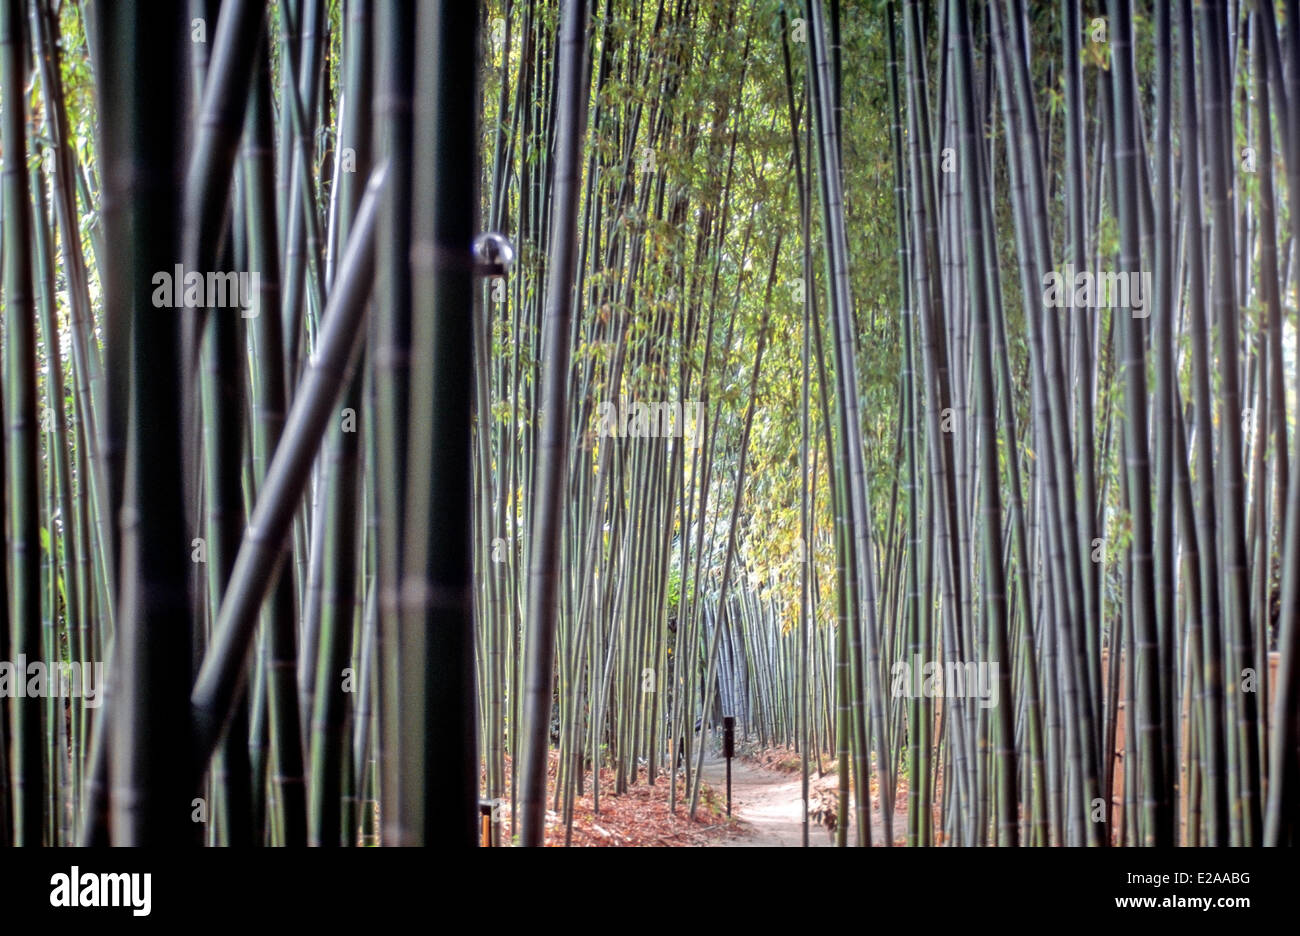 Japan, Honshu island, Kyoto bamboo forest Stock Photo